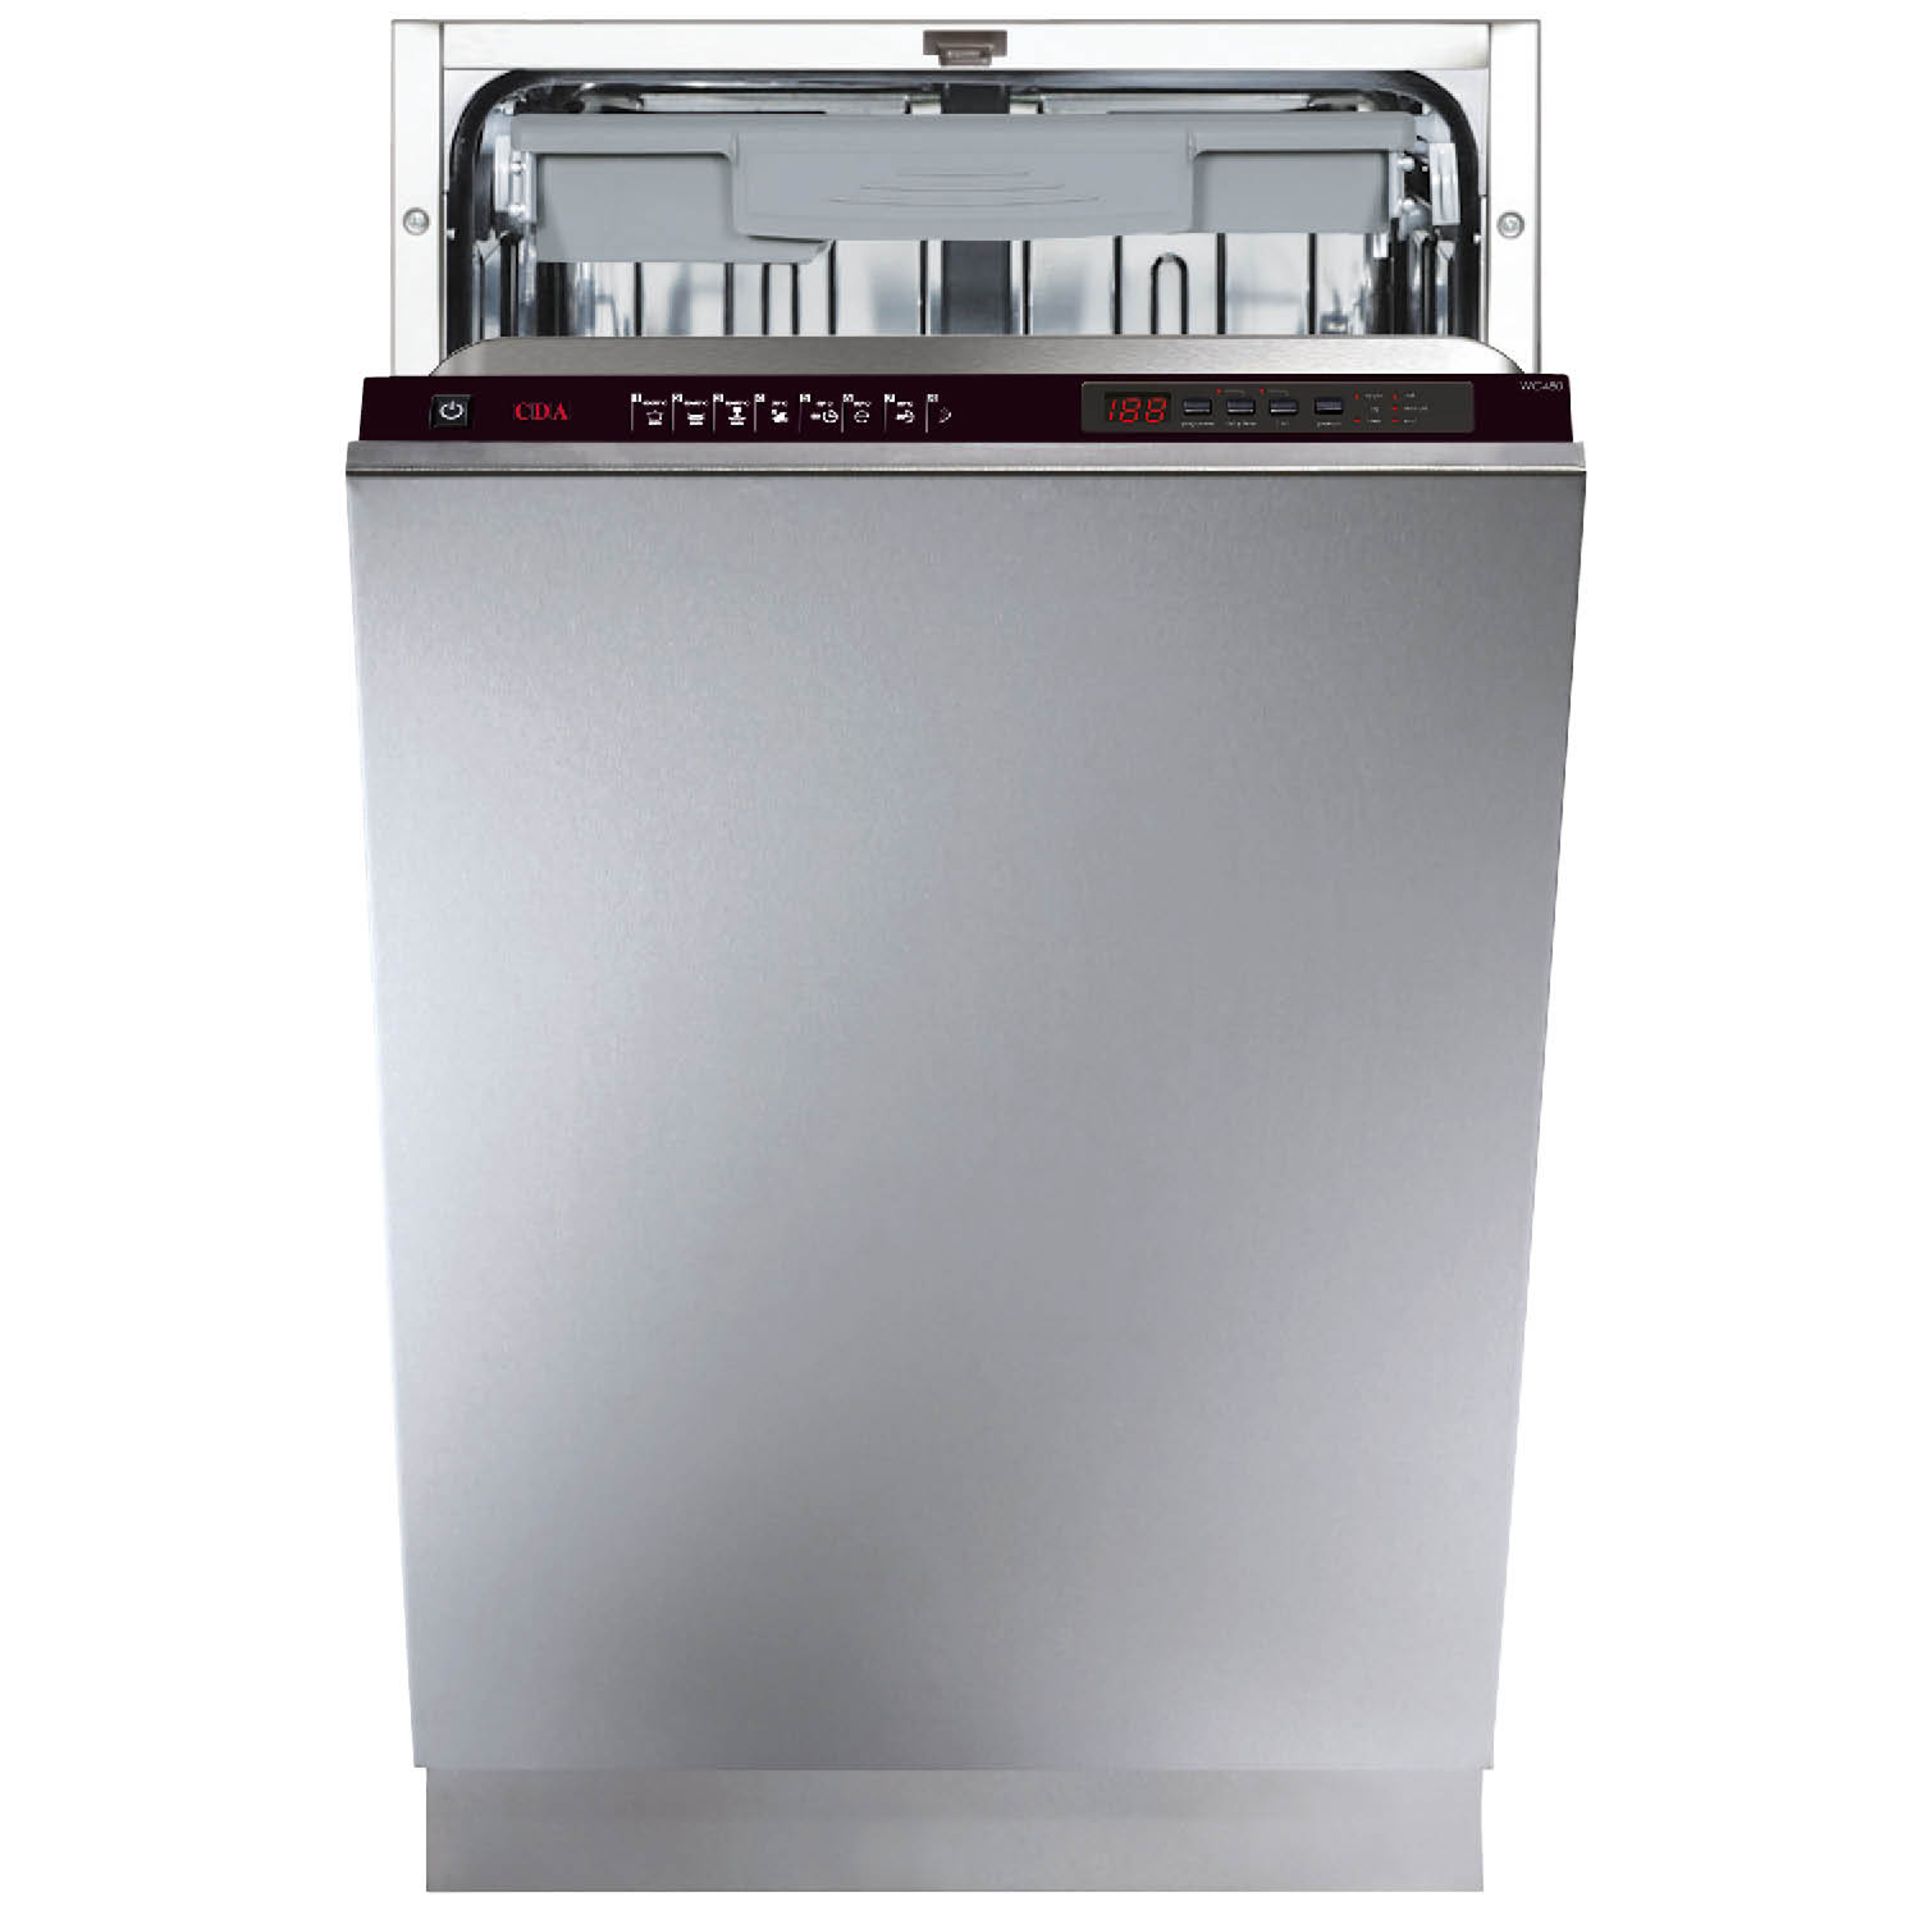 + VAT Brand New CDA WC480 - 10 Place Slimline Dishwasher - A++ Energy Rating - 3 Spray Levels -